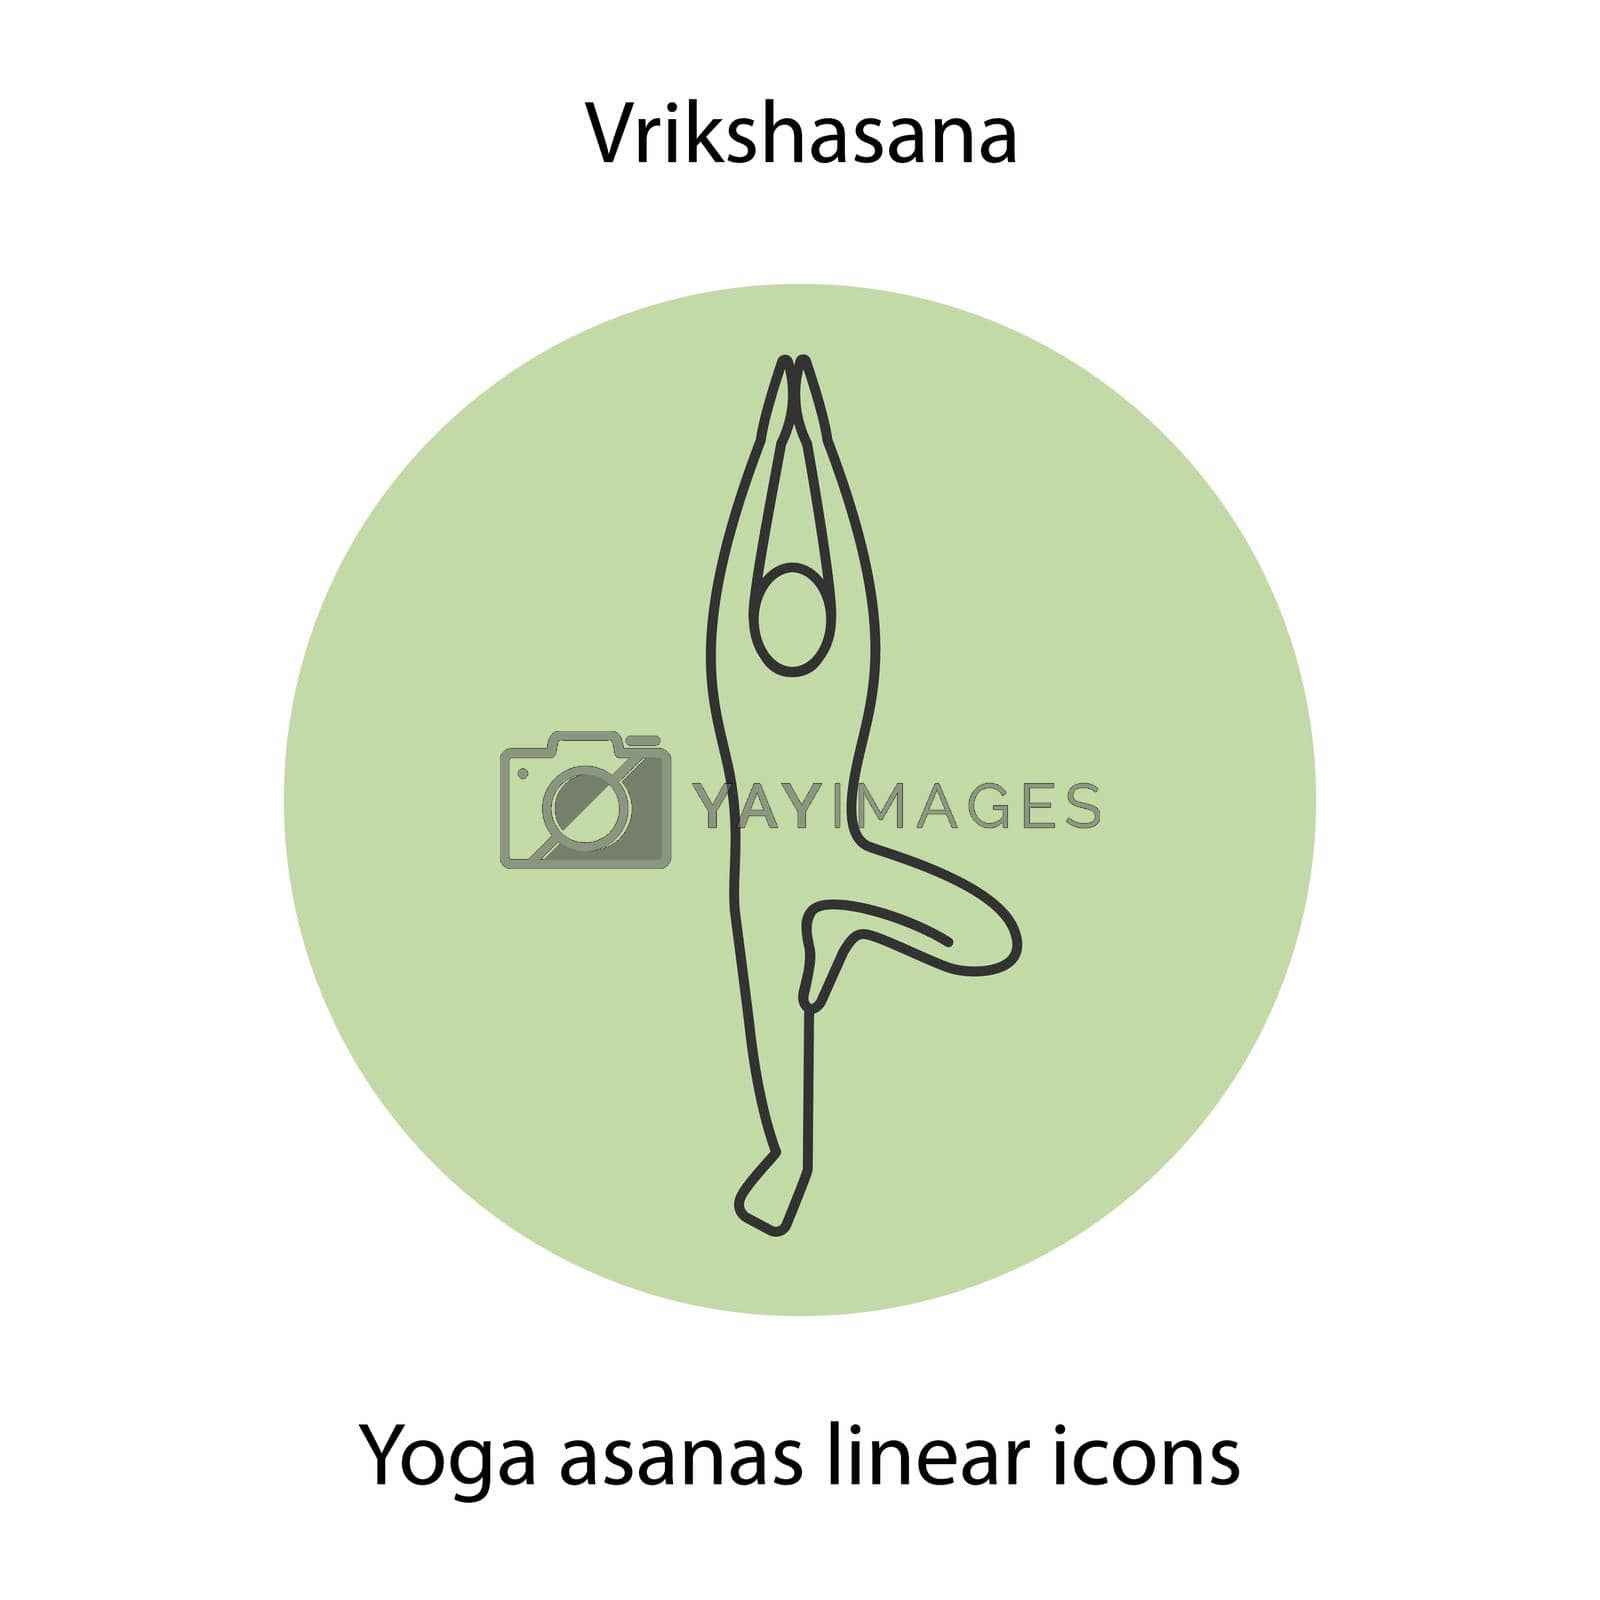 Vrikshasana yoga position linear icon. Thin line illustration. Yoga asana contour symbol. Vector isolated outline drawing